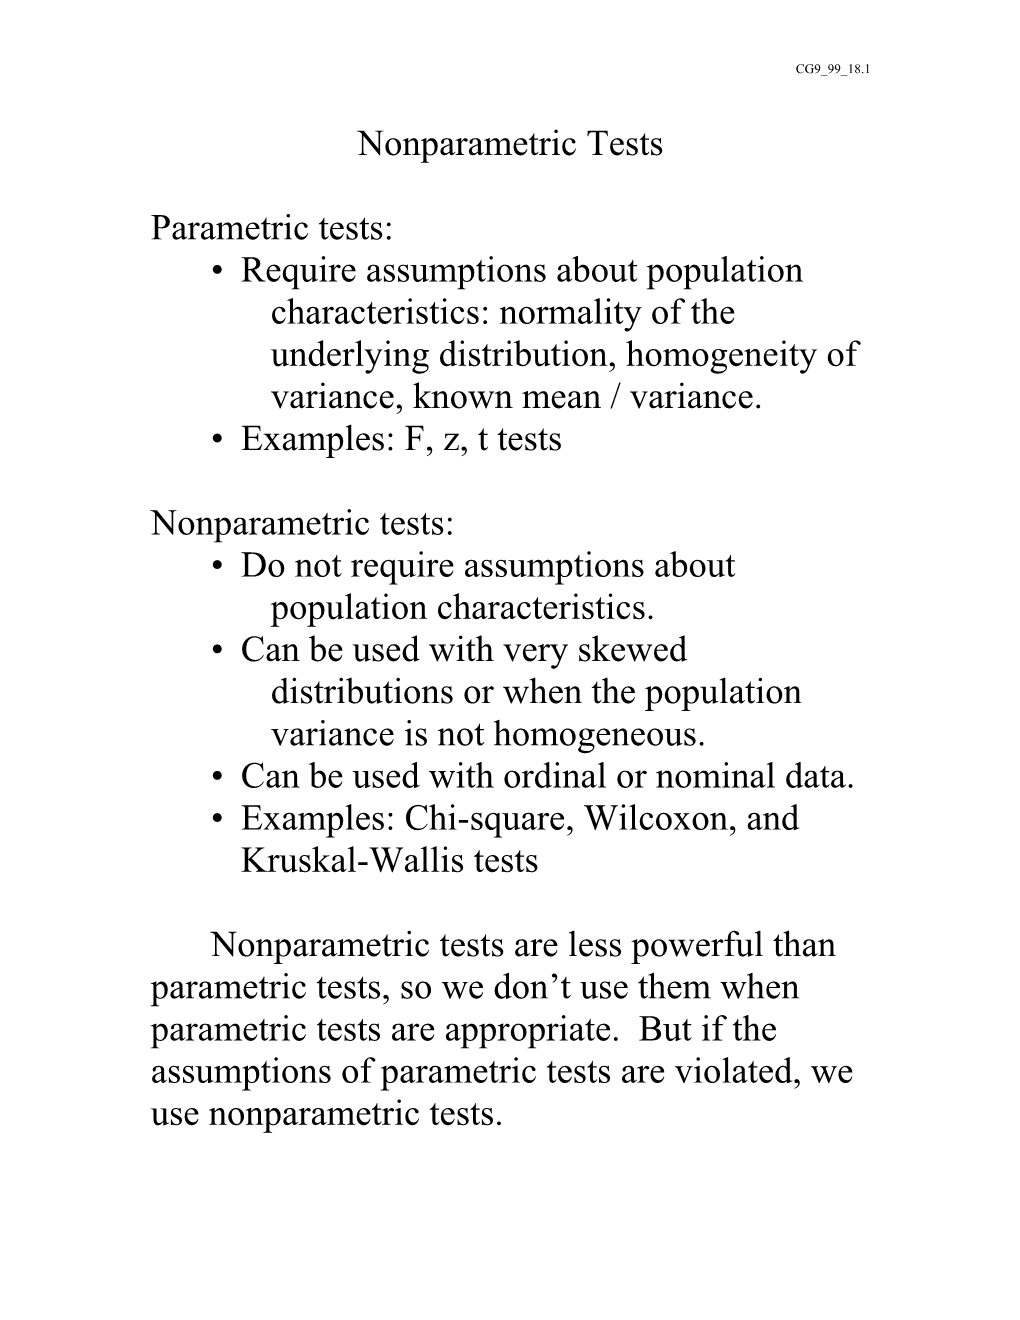 Nonparametric Tests